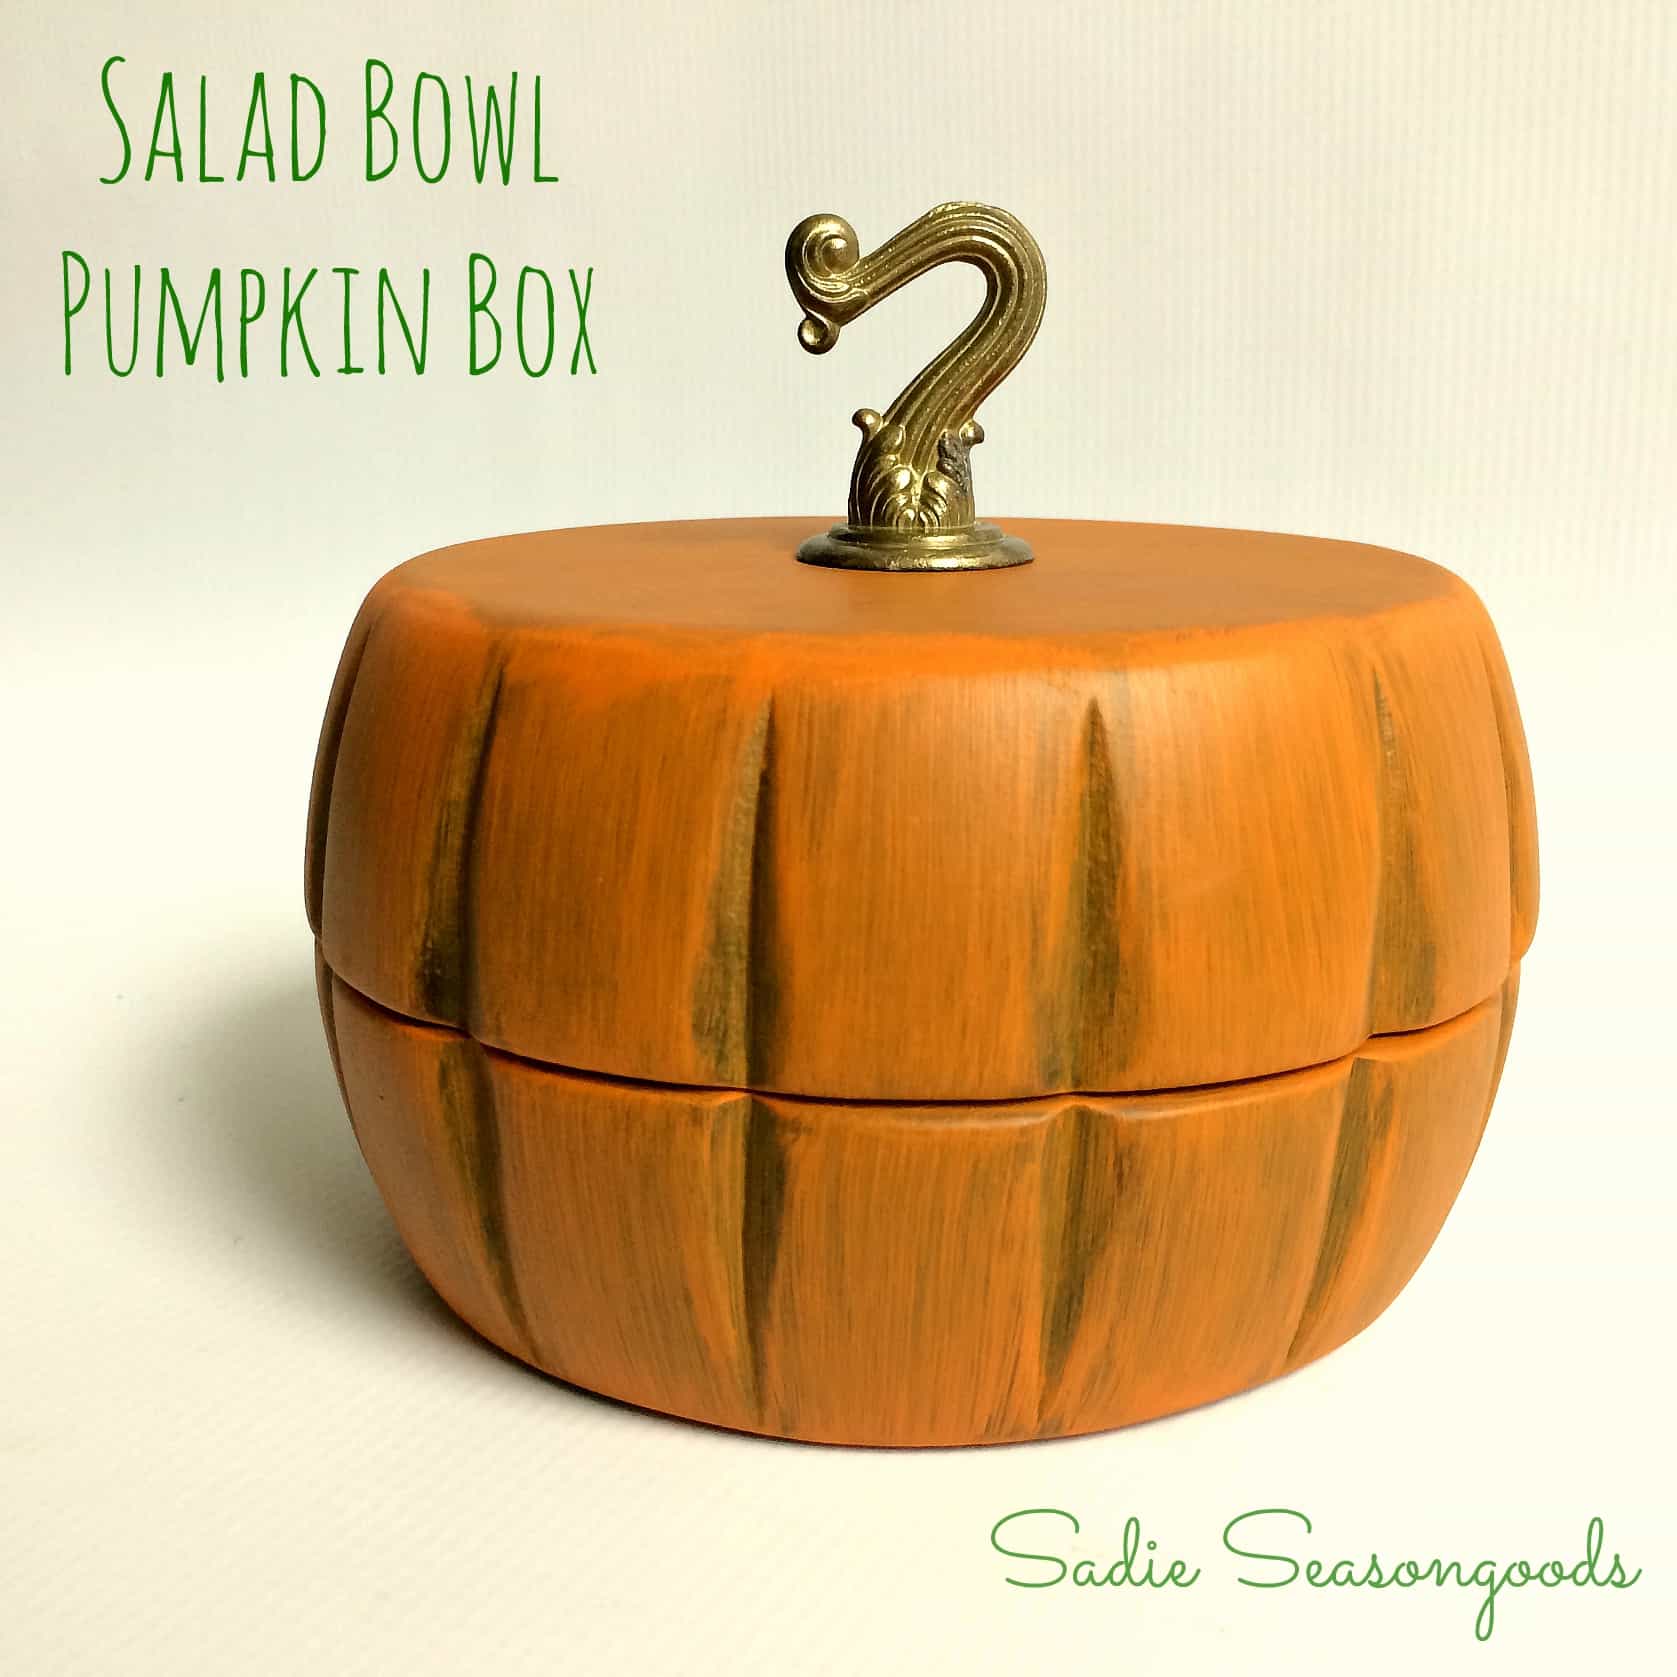 Sadie_Seasongoods_thrifted_wooden_salad_bowls_Pumpkin_trinket_box_for_Fall_Autumn_Decor